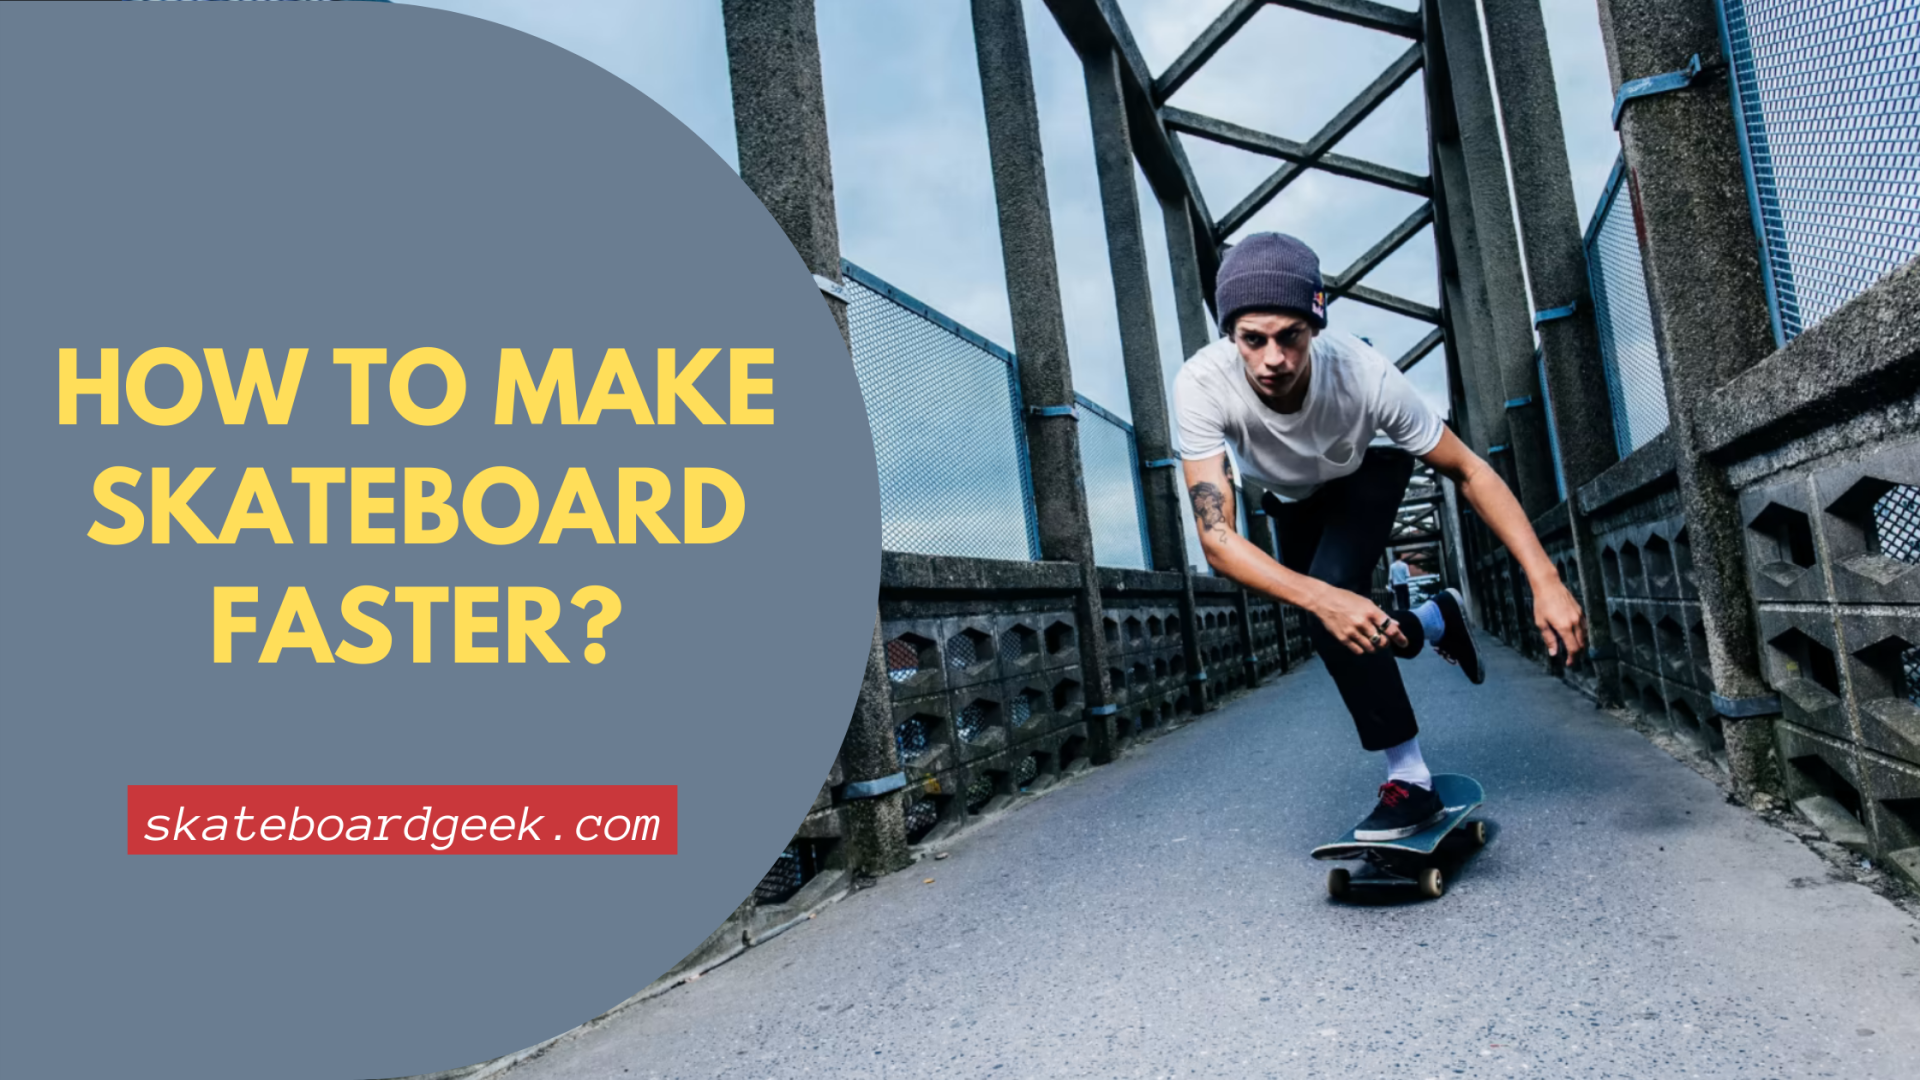 How to Make Skateboard Faster